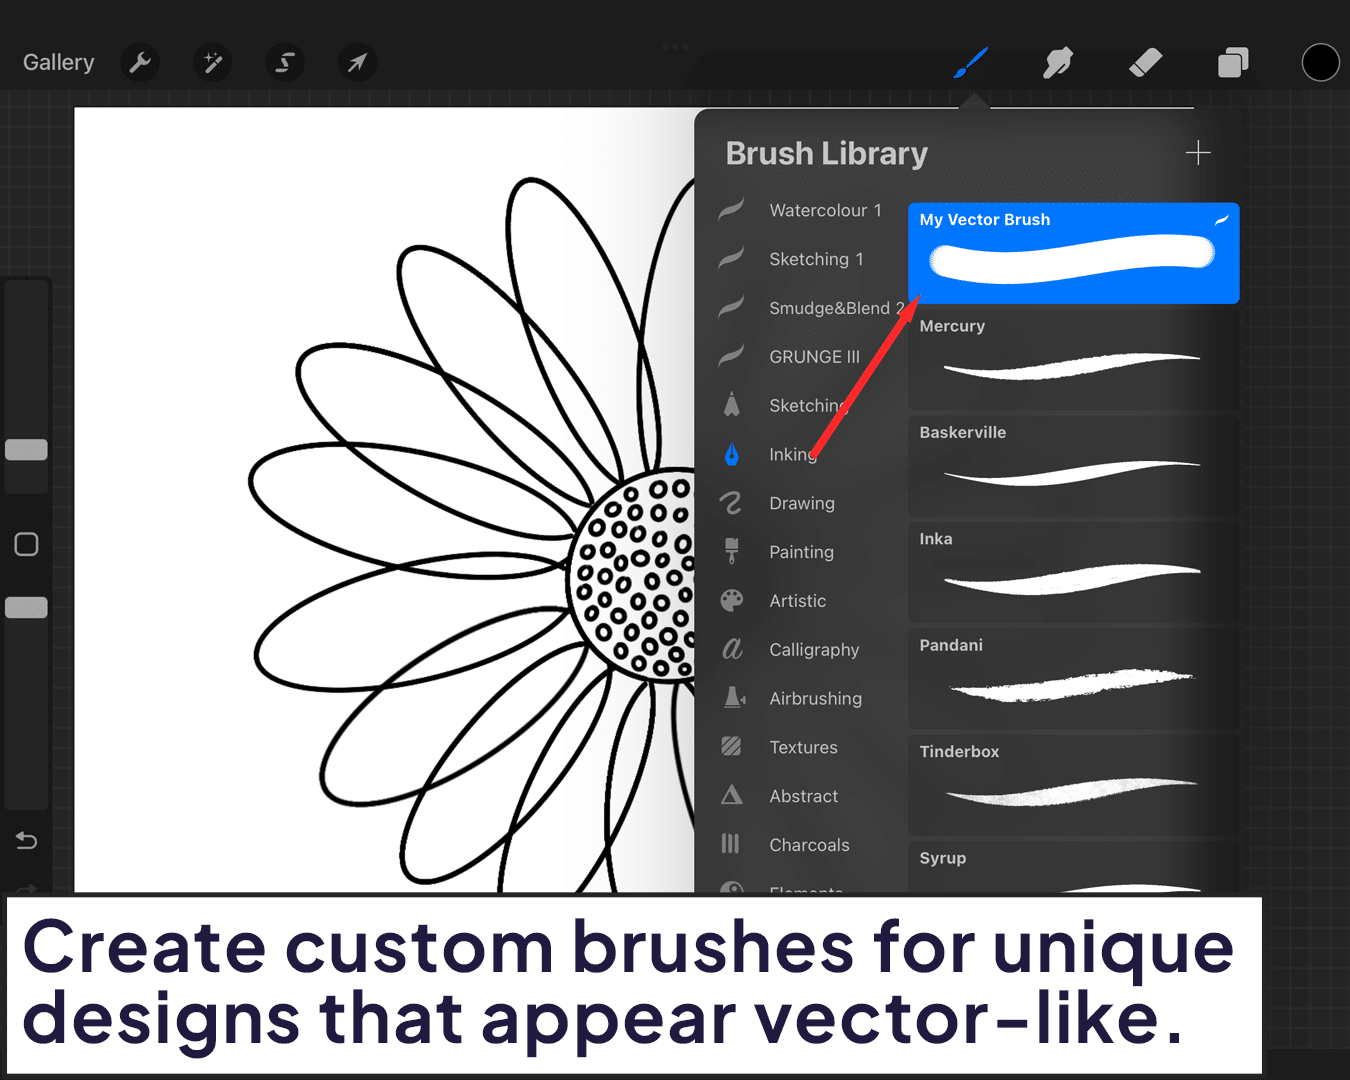 Creating custom brushes